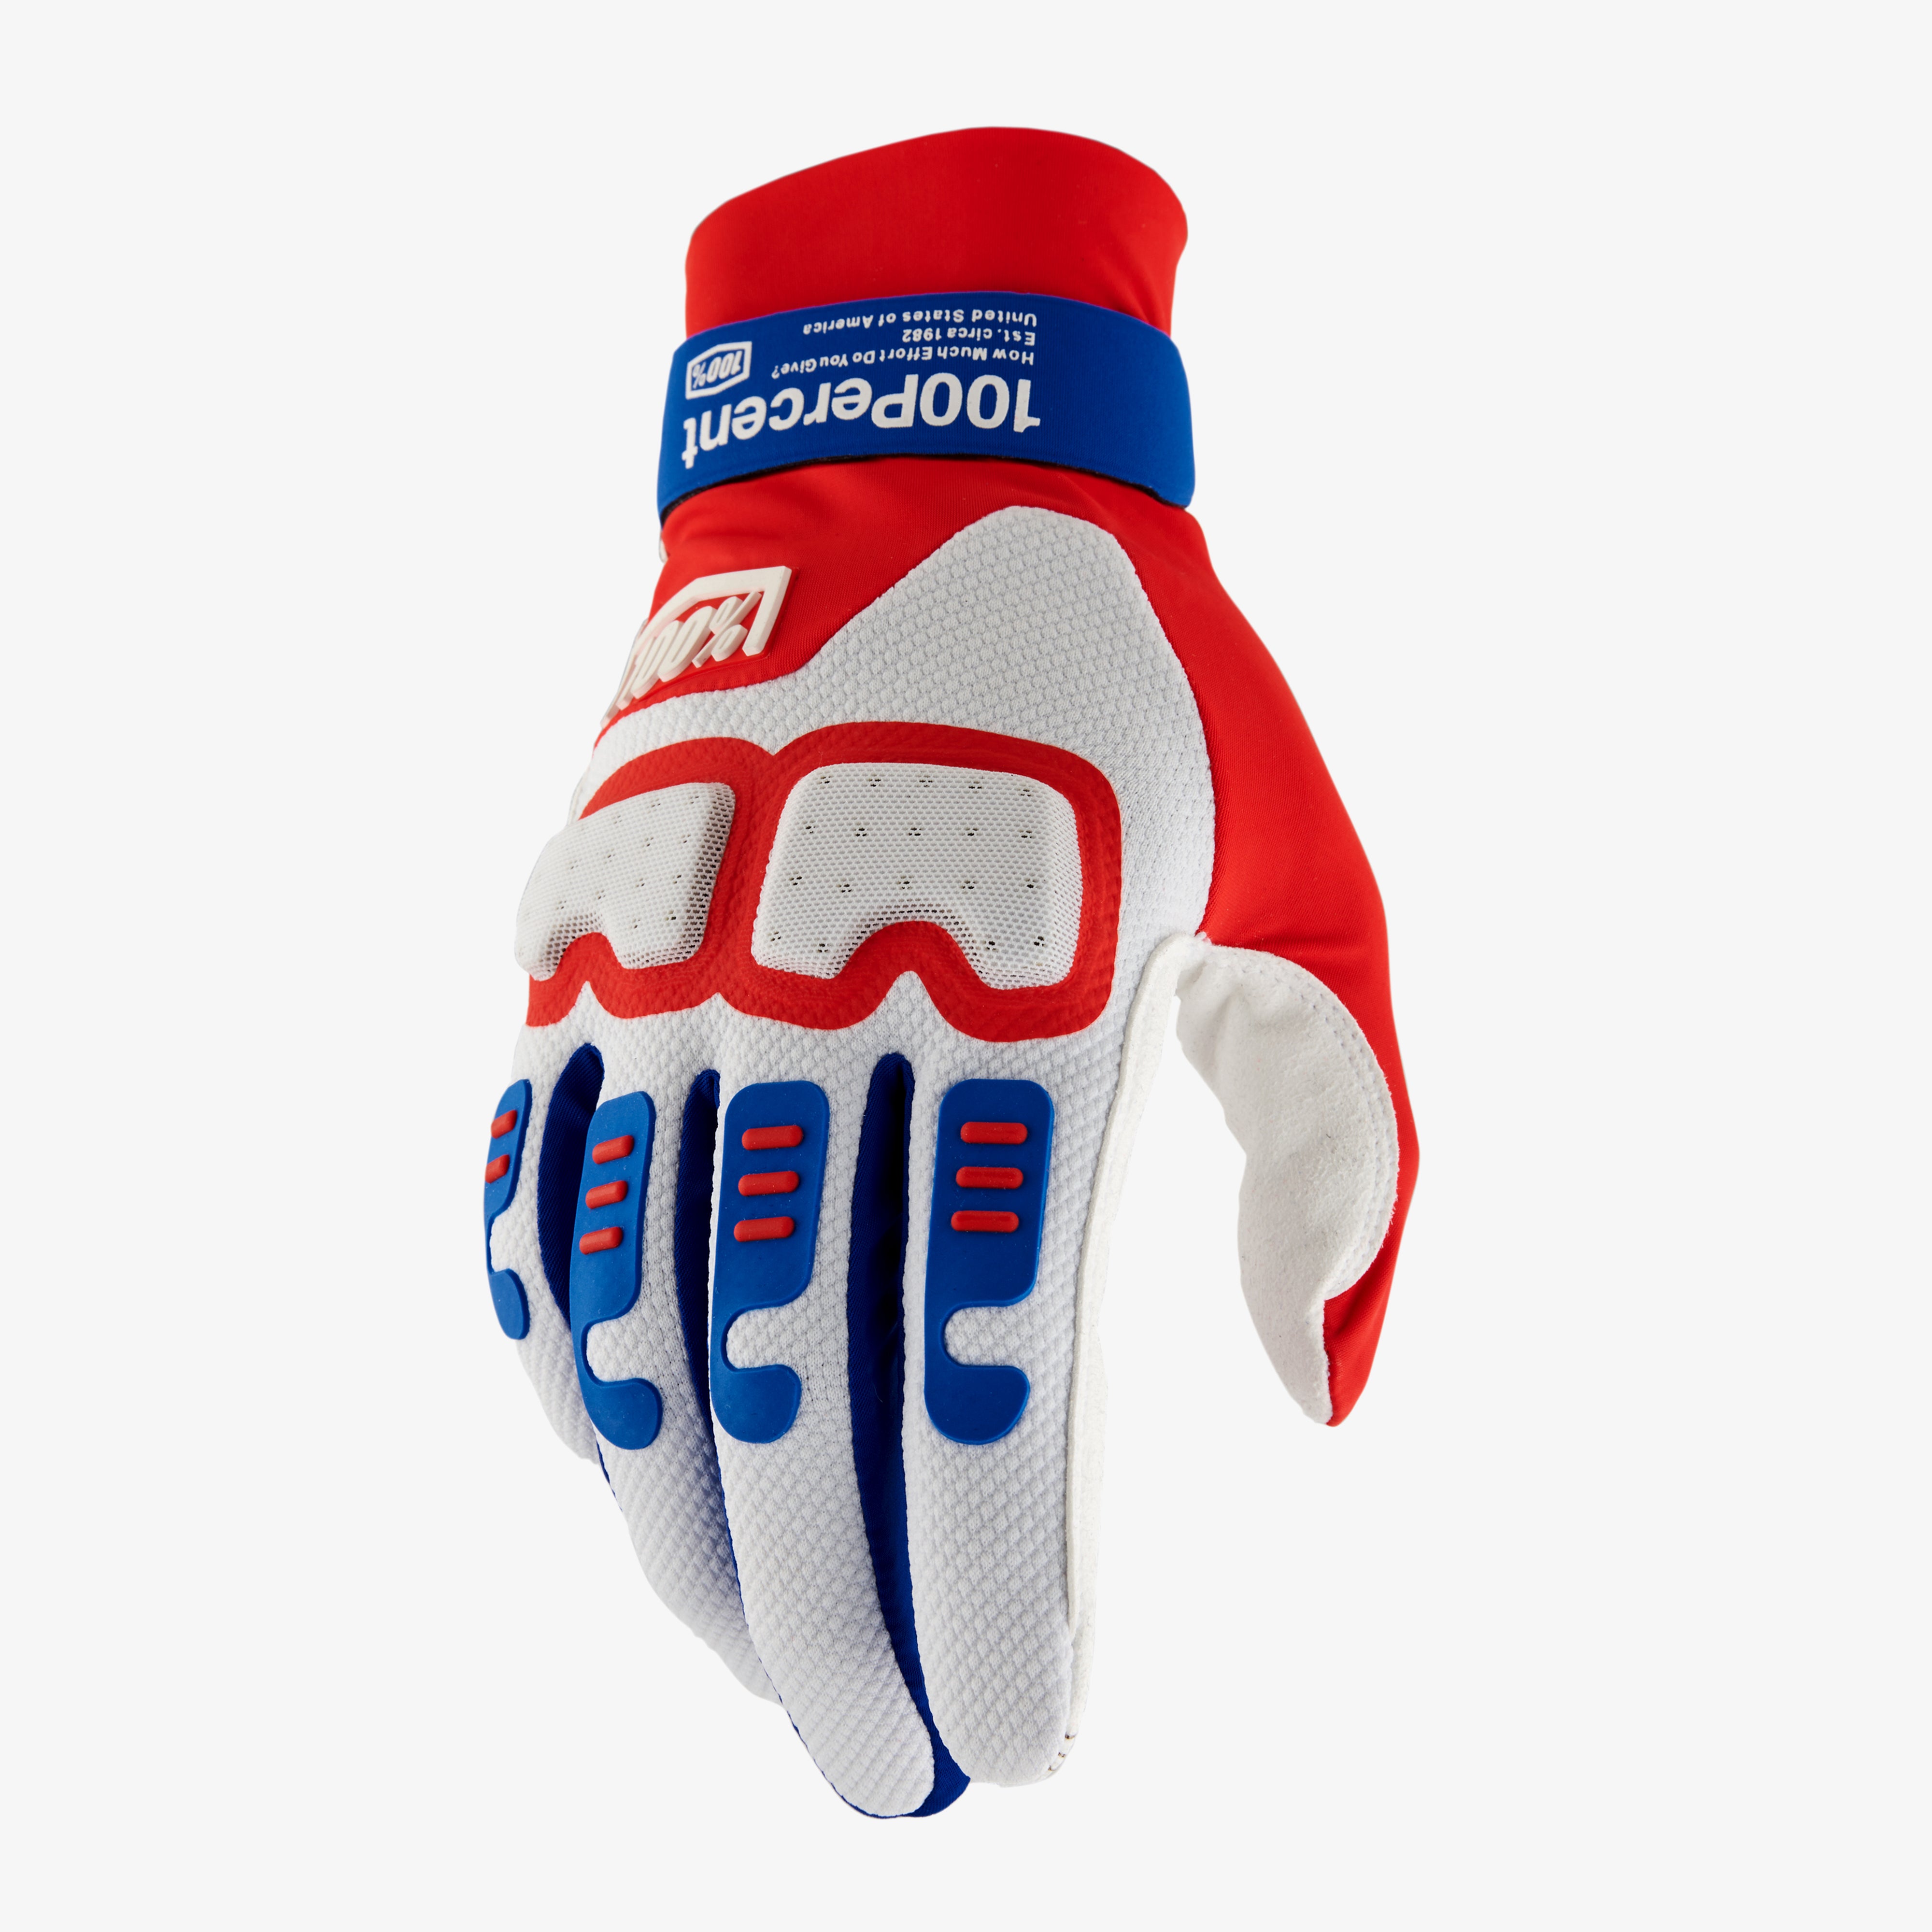 LANGDALE Gloves Red/White/Blue